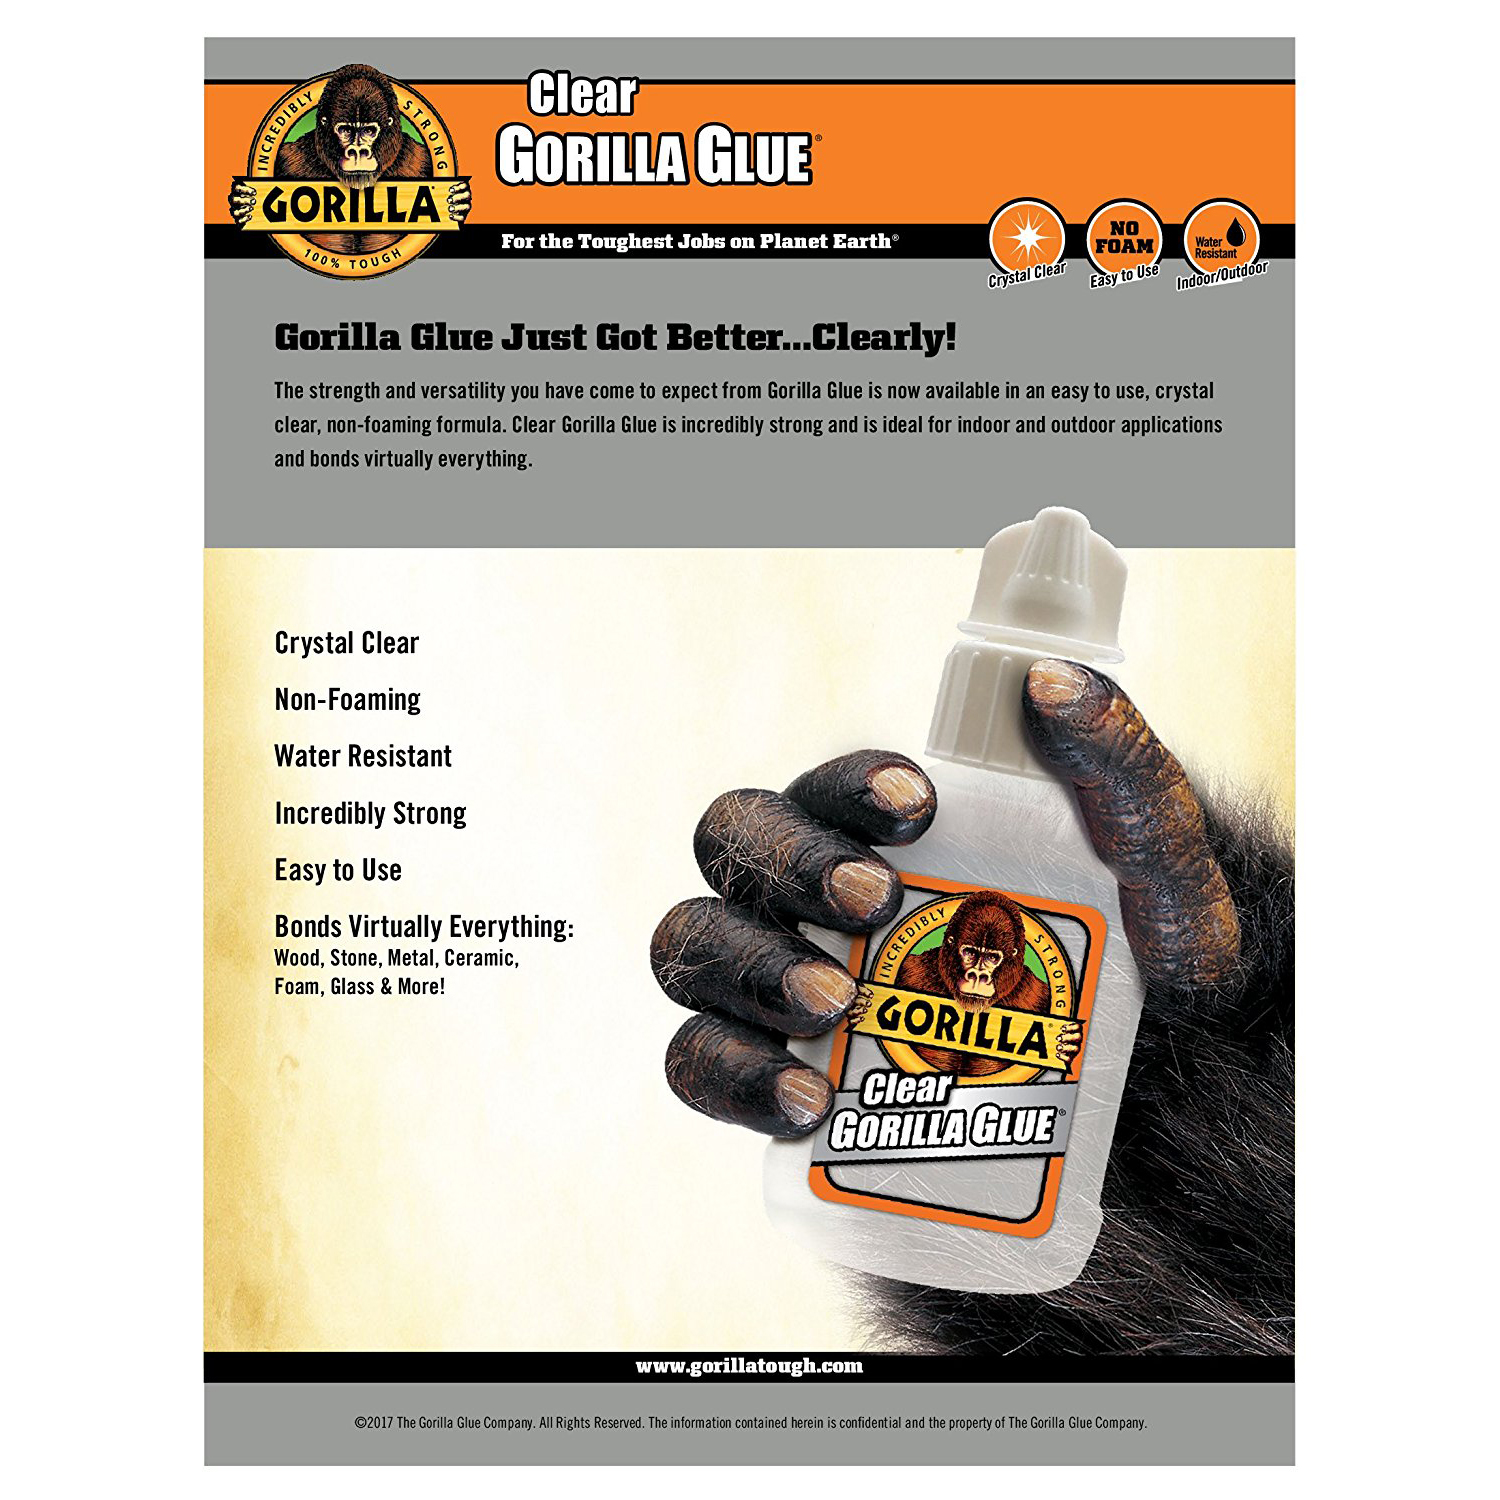 Clear Gorilla Glue Fact Sheet